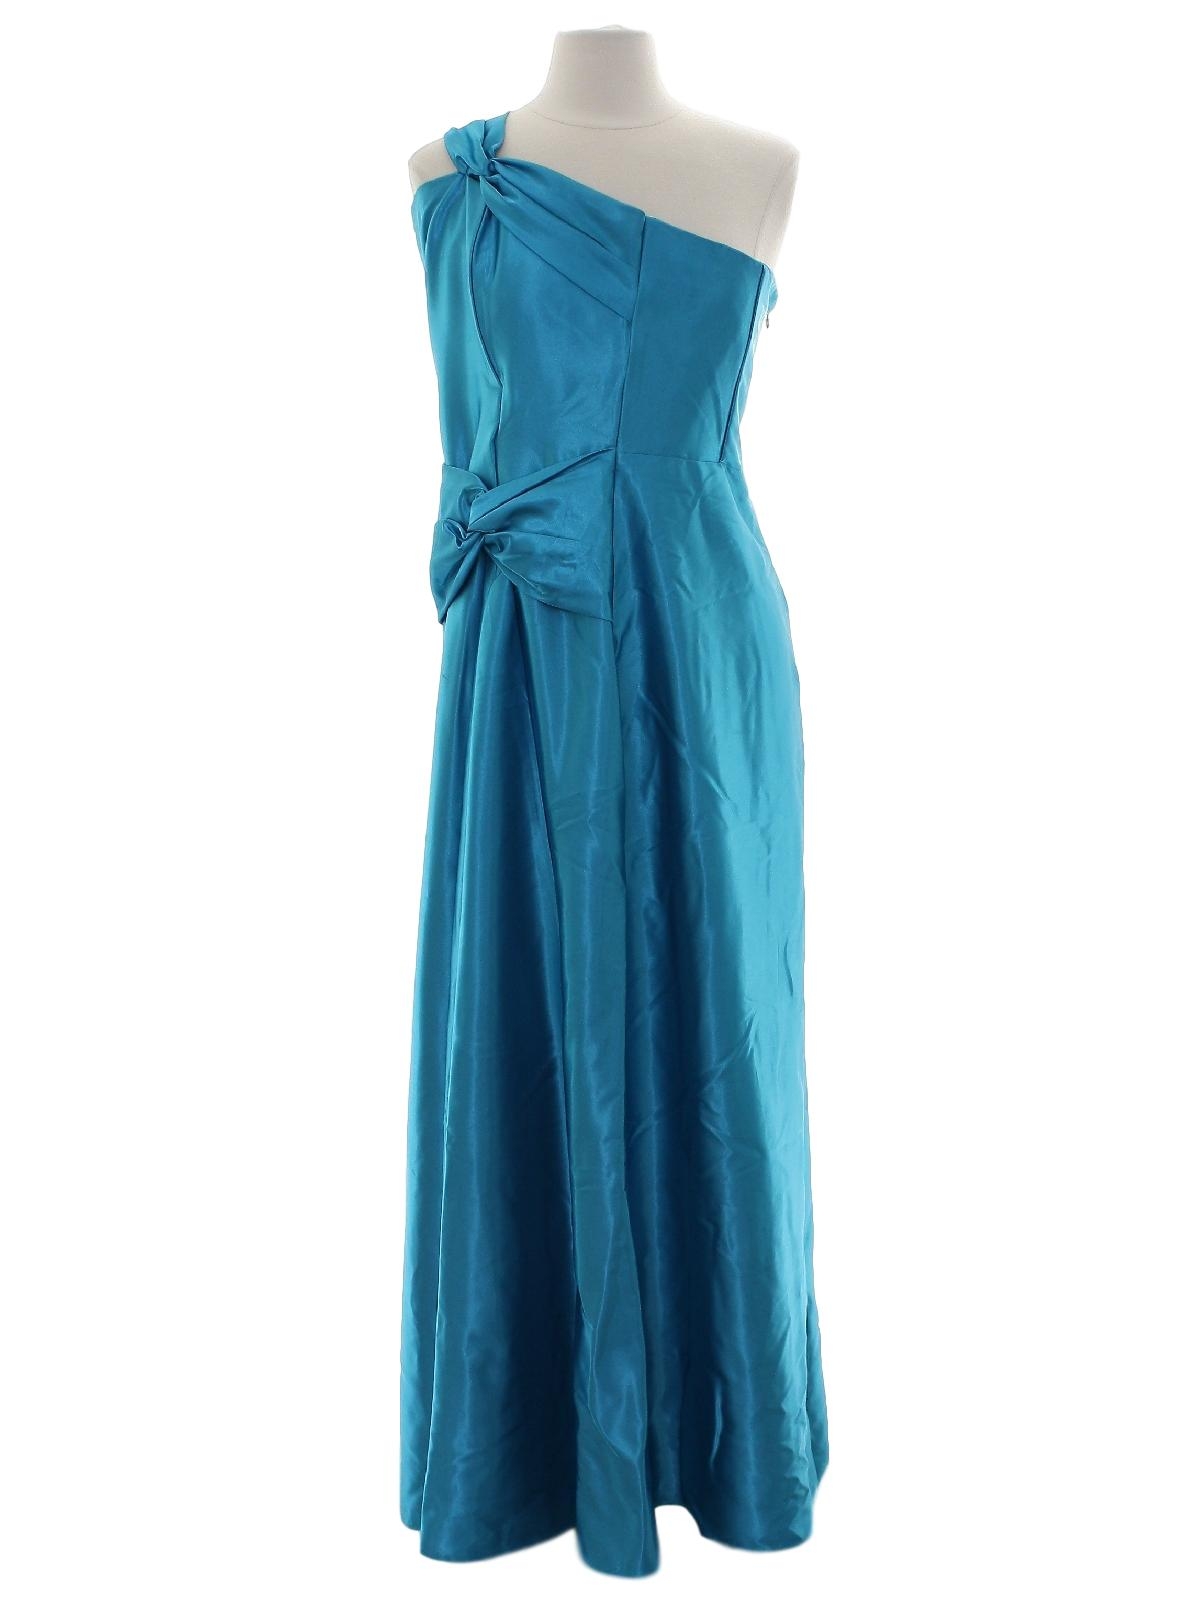 blue shoulderless dress